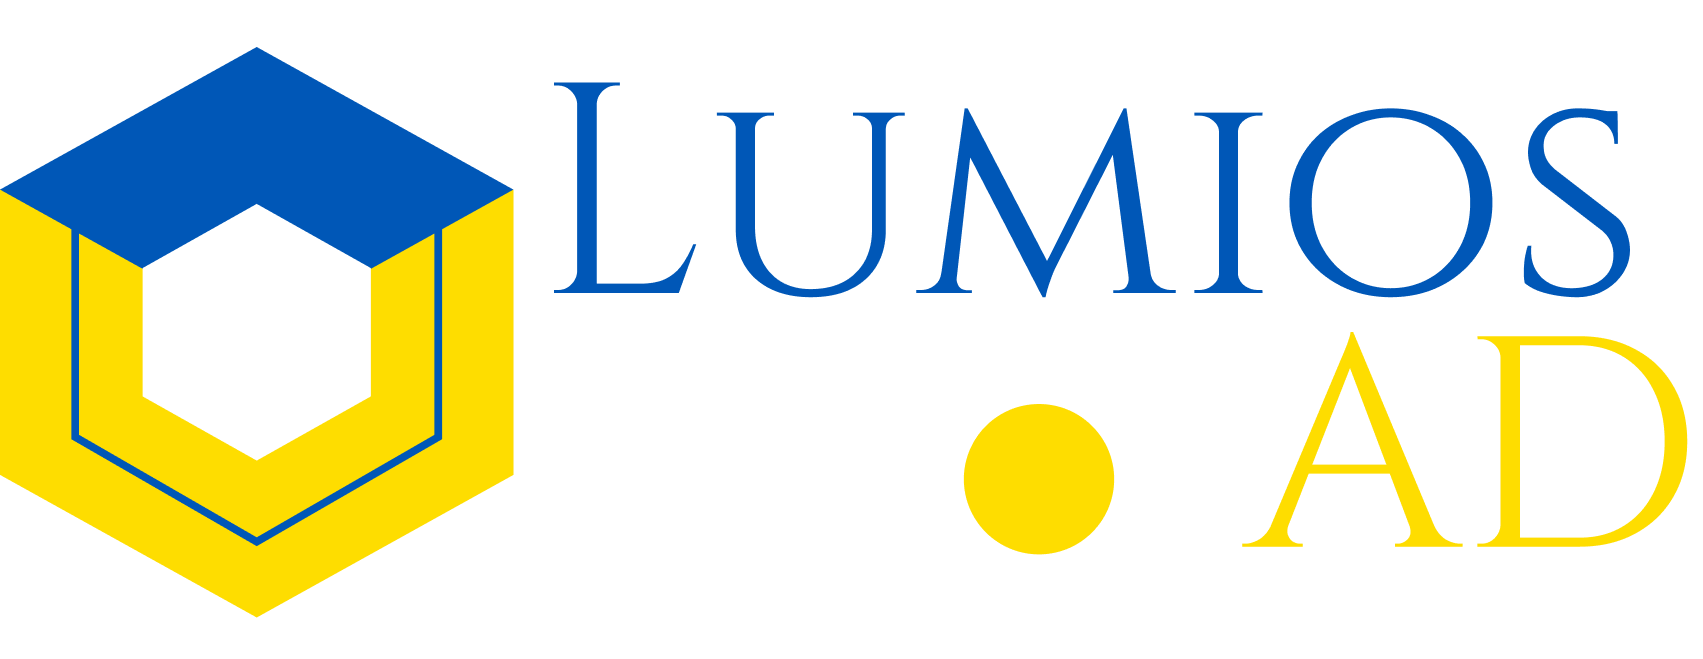 lumios-ad-logo-ua